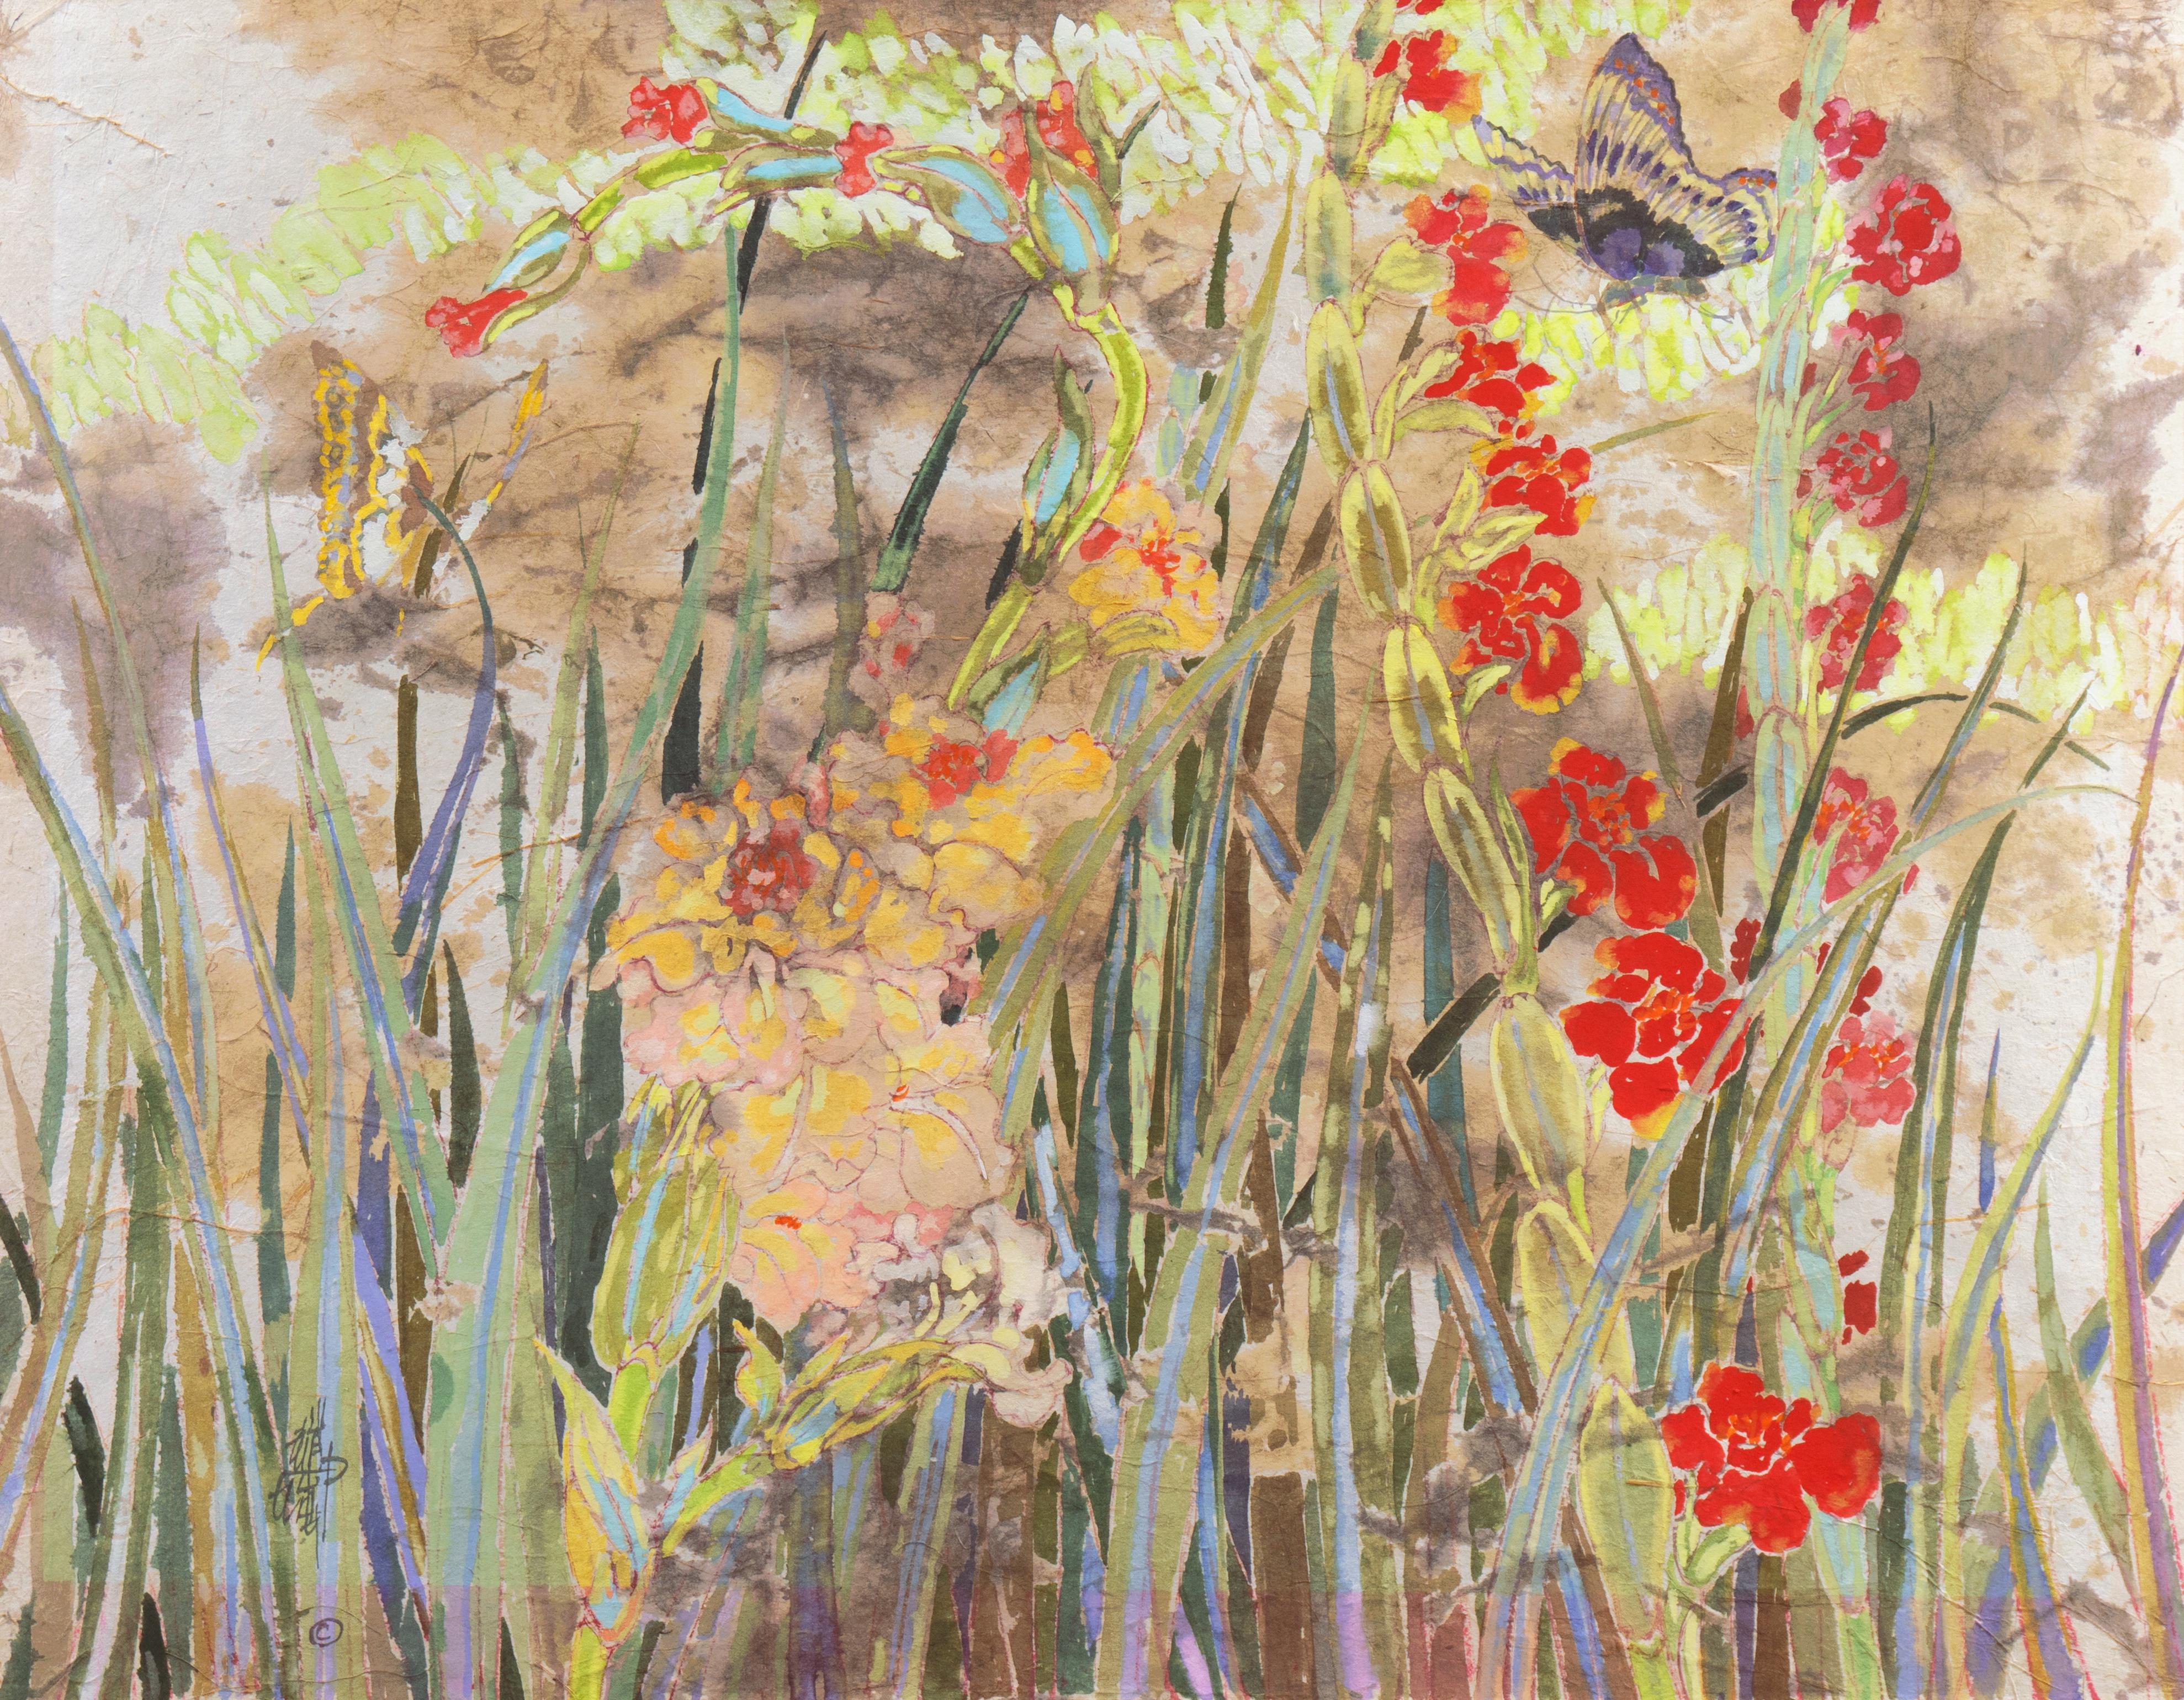 Peter Hsu Landscape Art - 'Wild Flowers in the Breeze', Art Students League, New York, Paris Biennale 